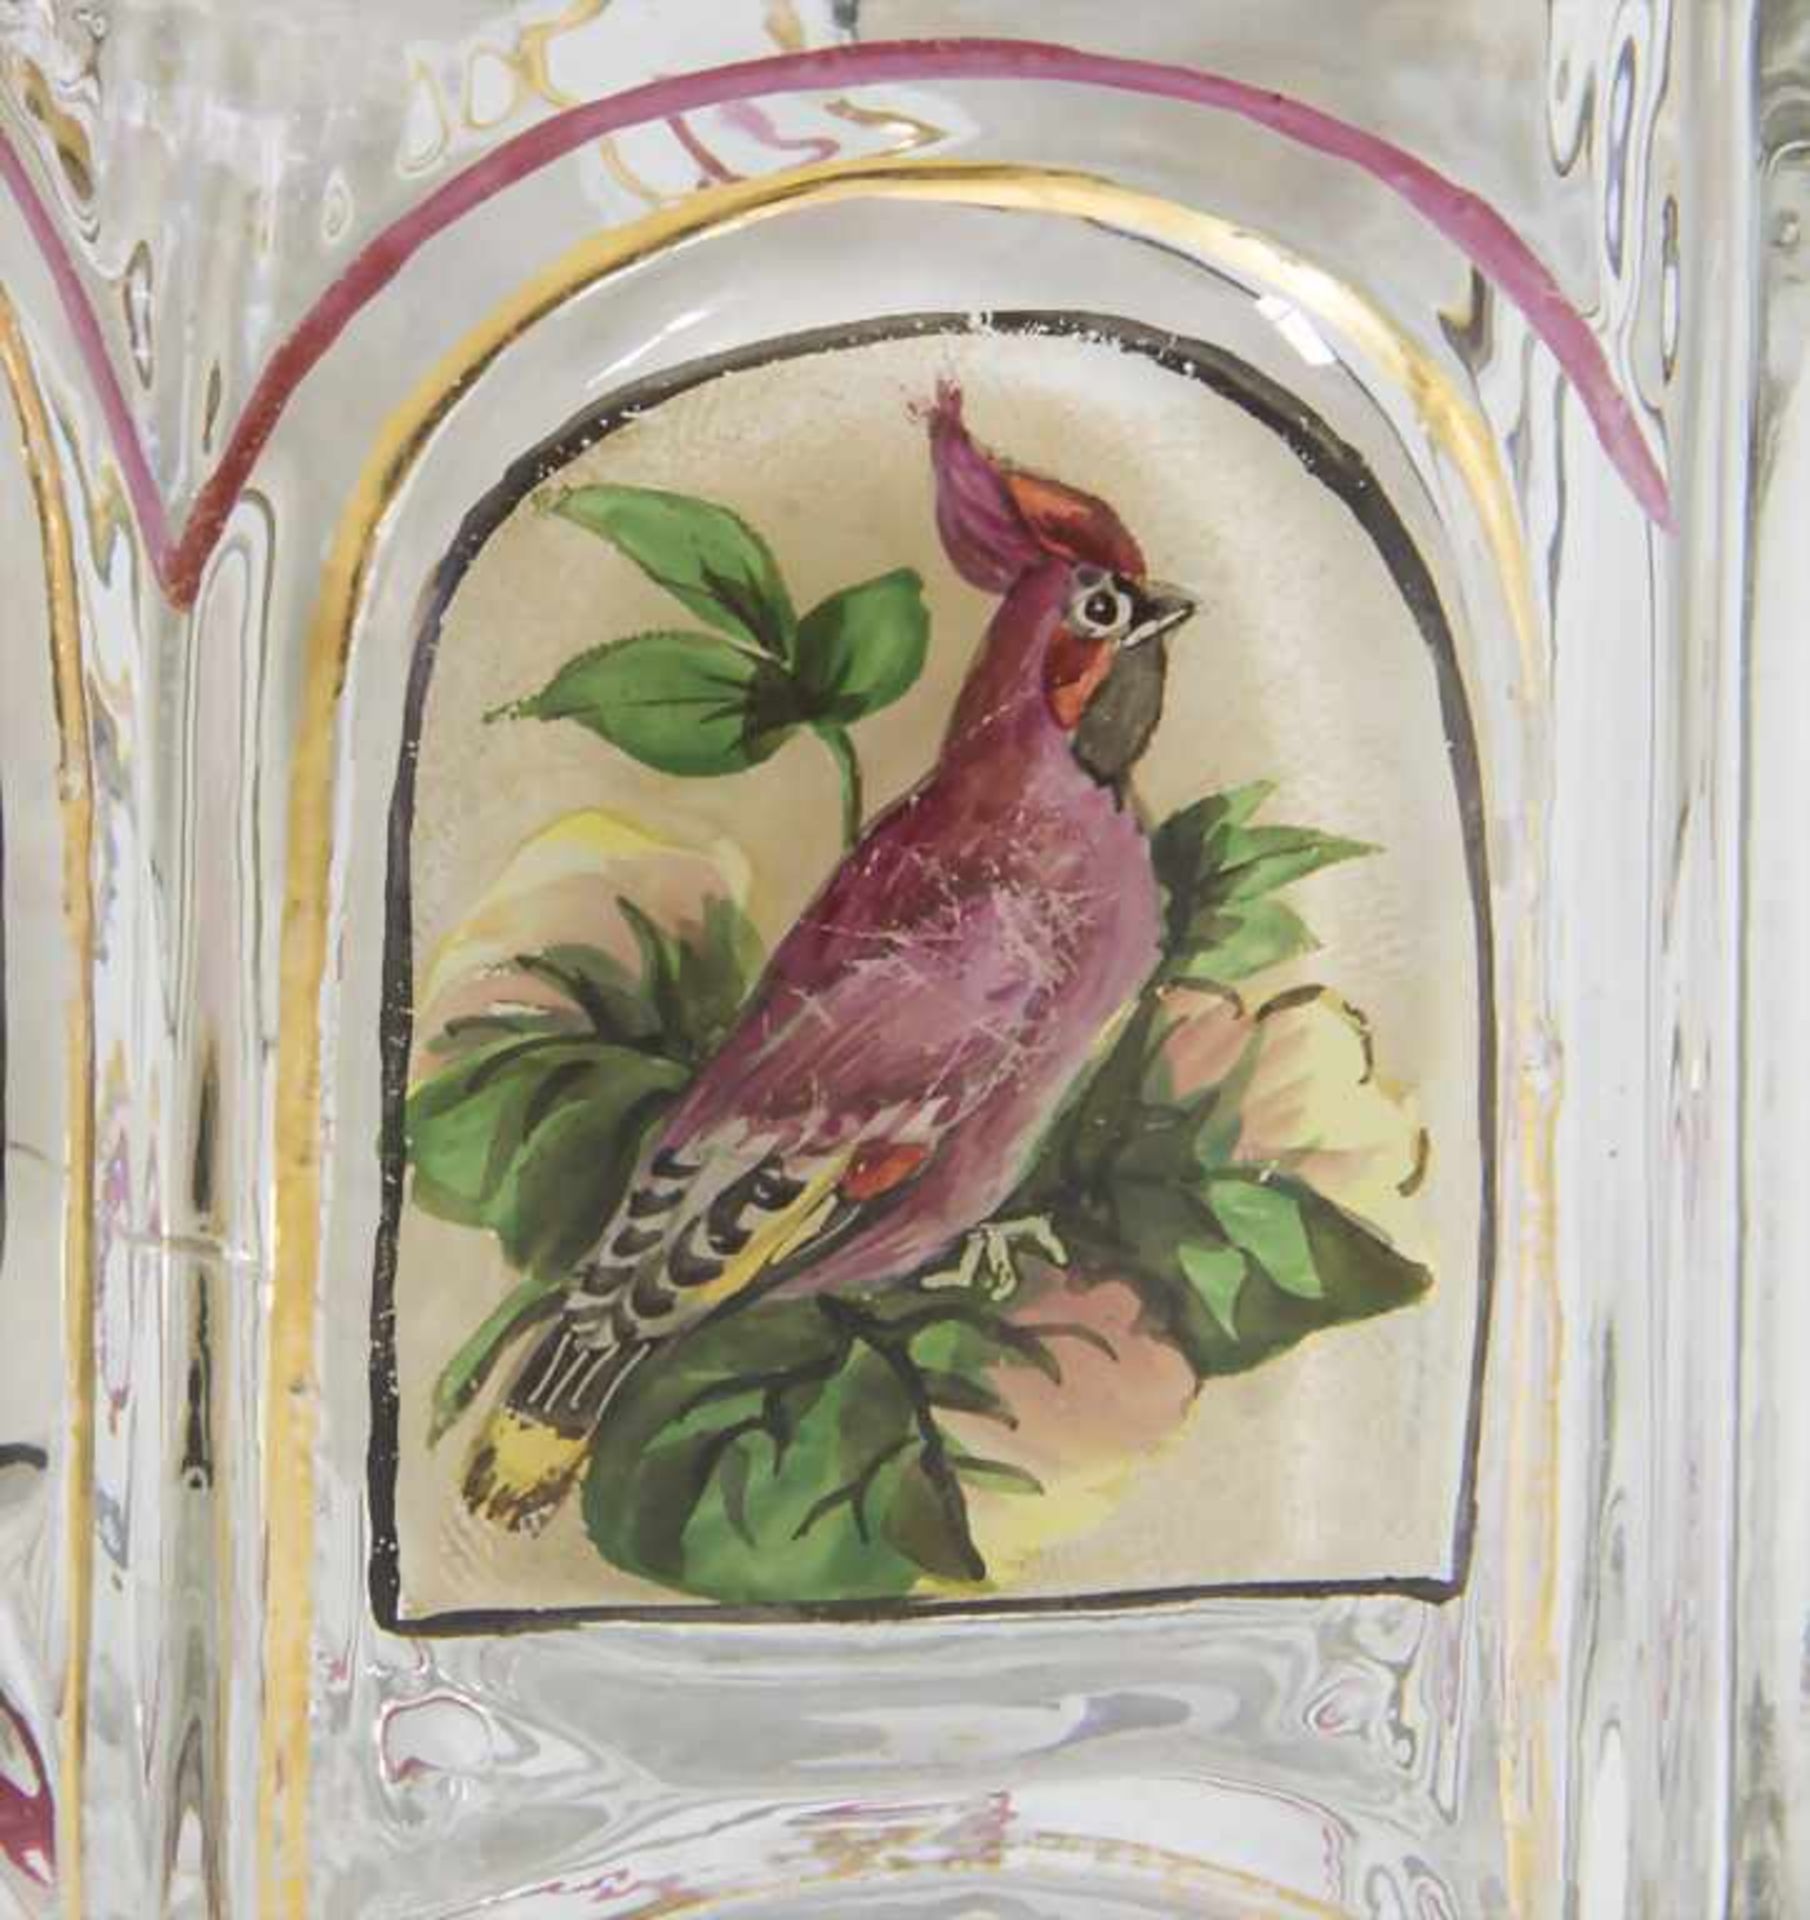 Glaskrug mit Figuren, Rosen und Vögeln / A glass jug with figures, birds and rosesMat - Image 5 of 5